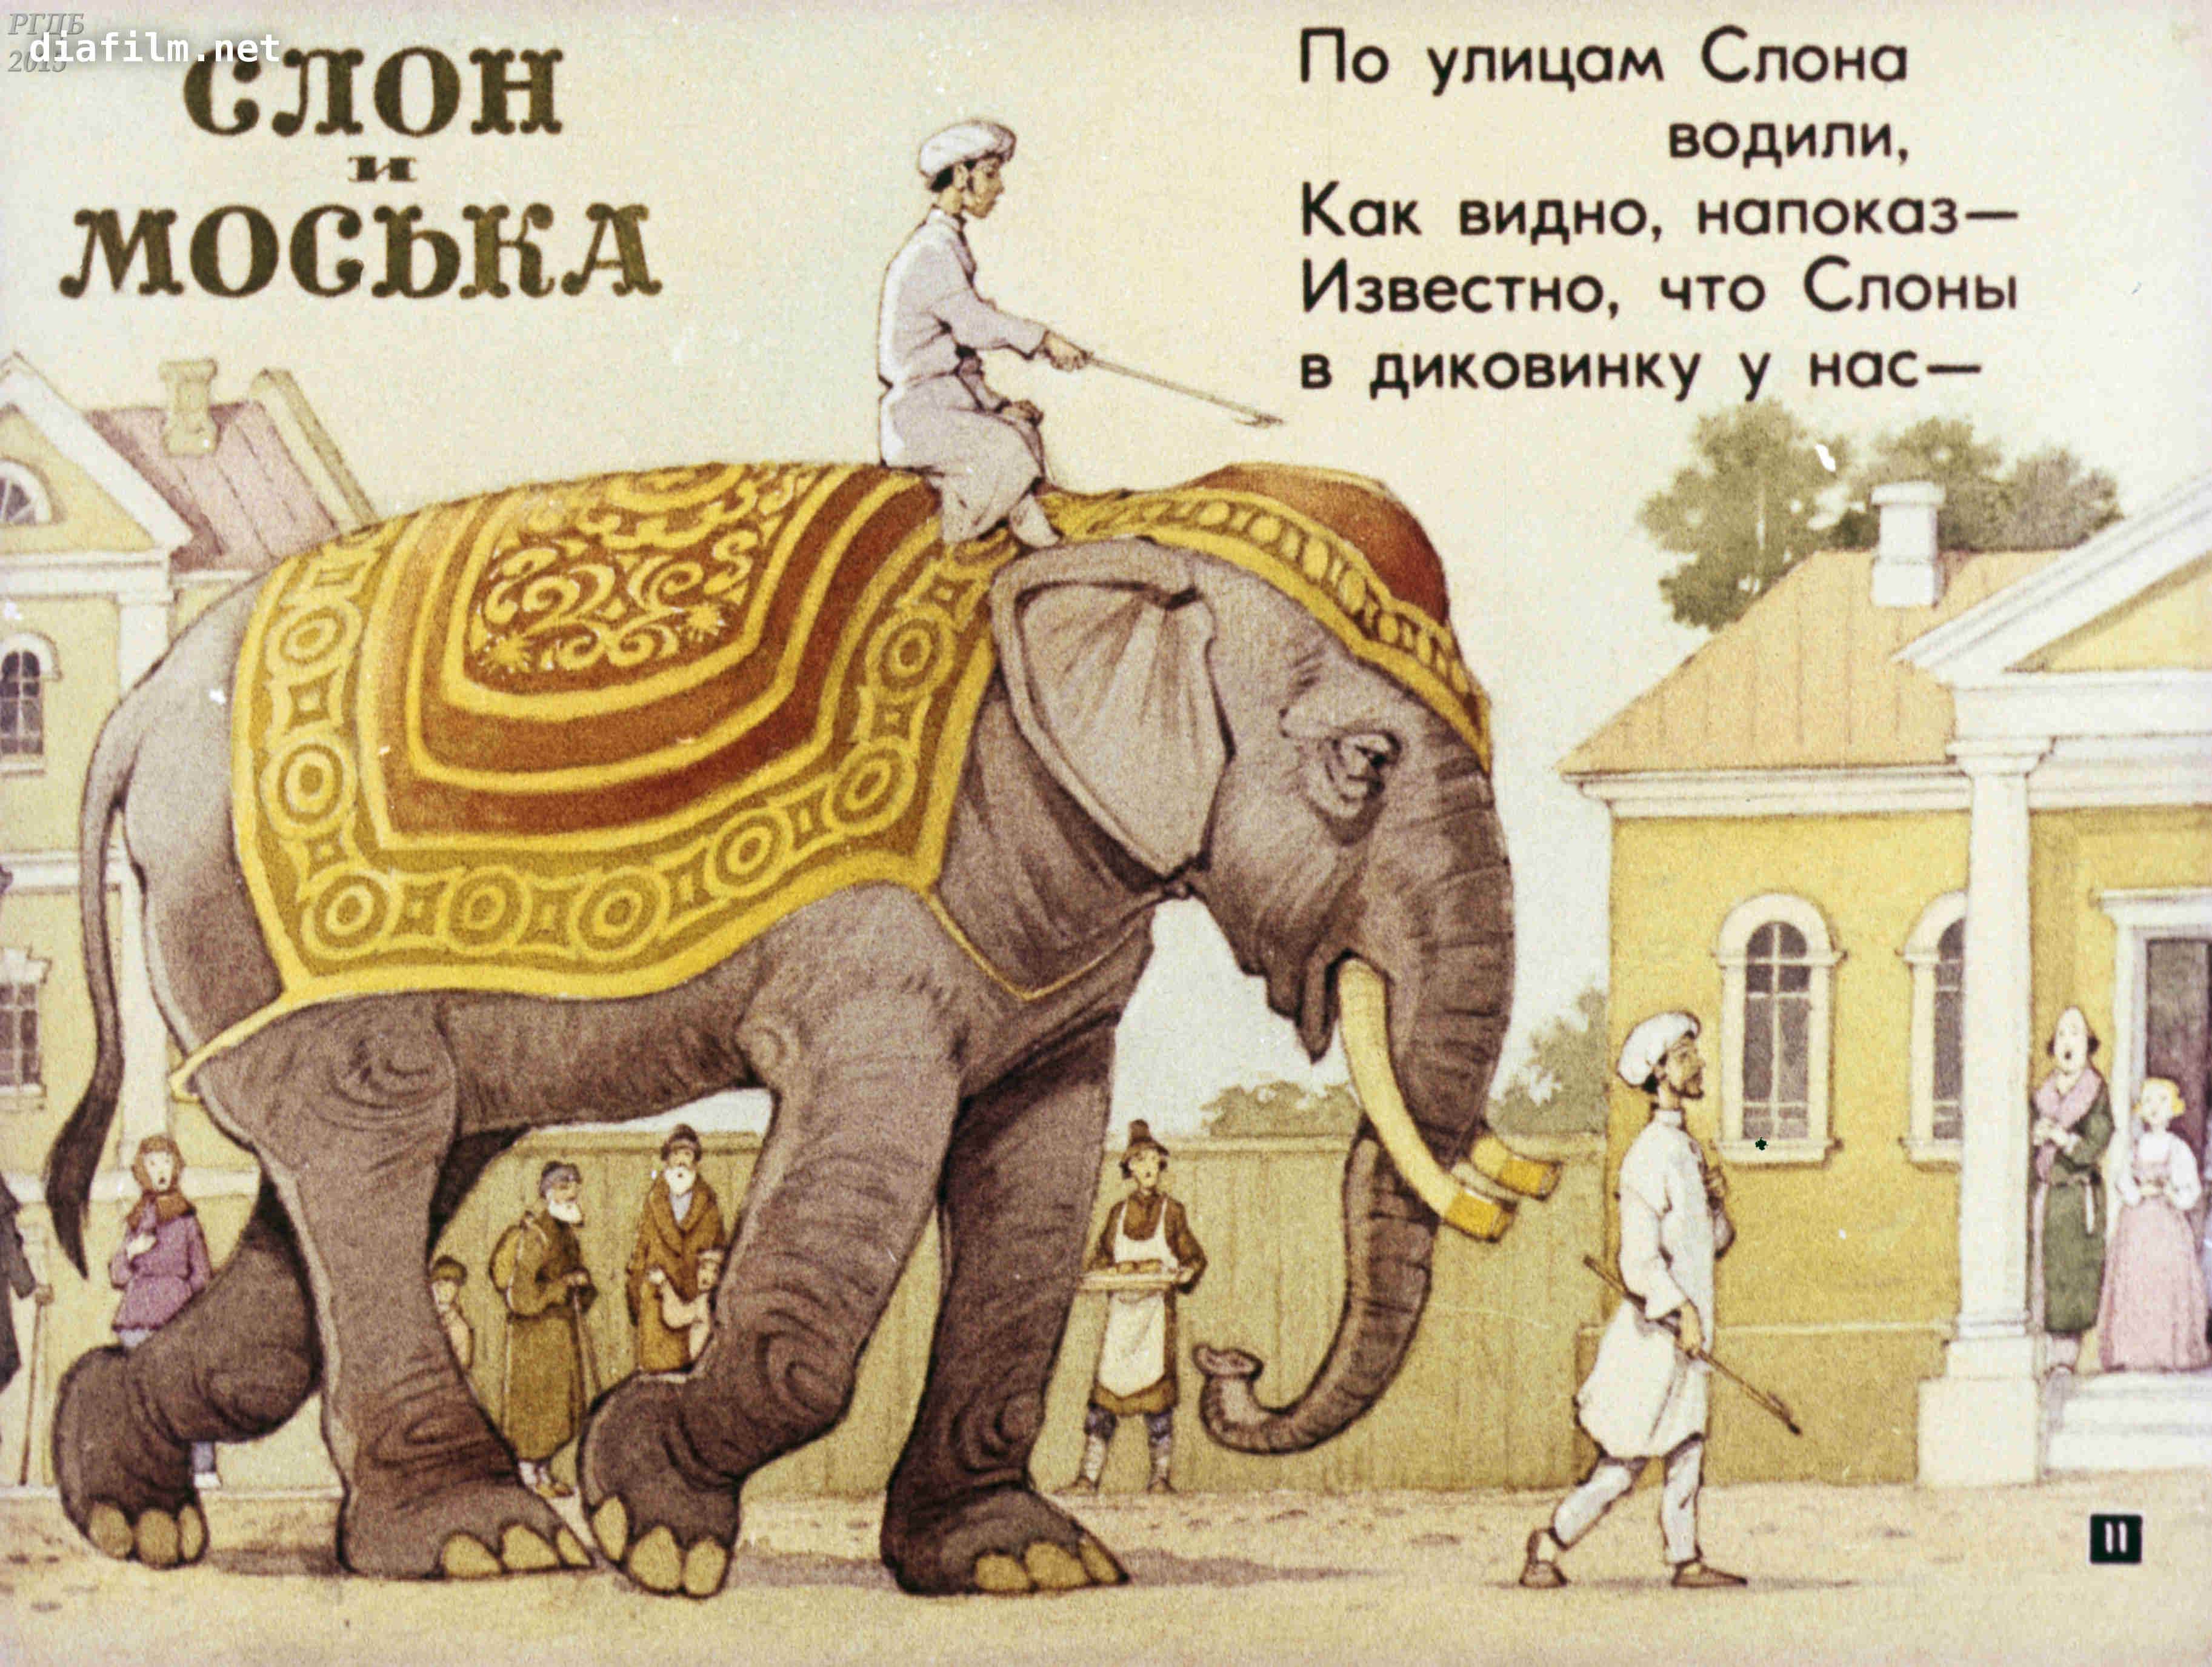 Слон и моська автор. Басня Крылова слон и моська. Басня слон и моська Крылов. Иллюстрация к басне Крылова слон и моська.